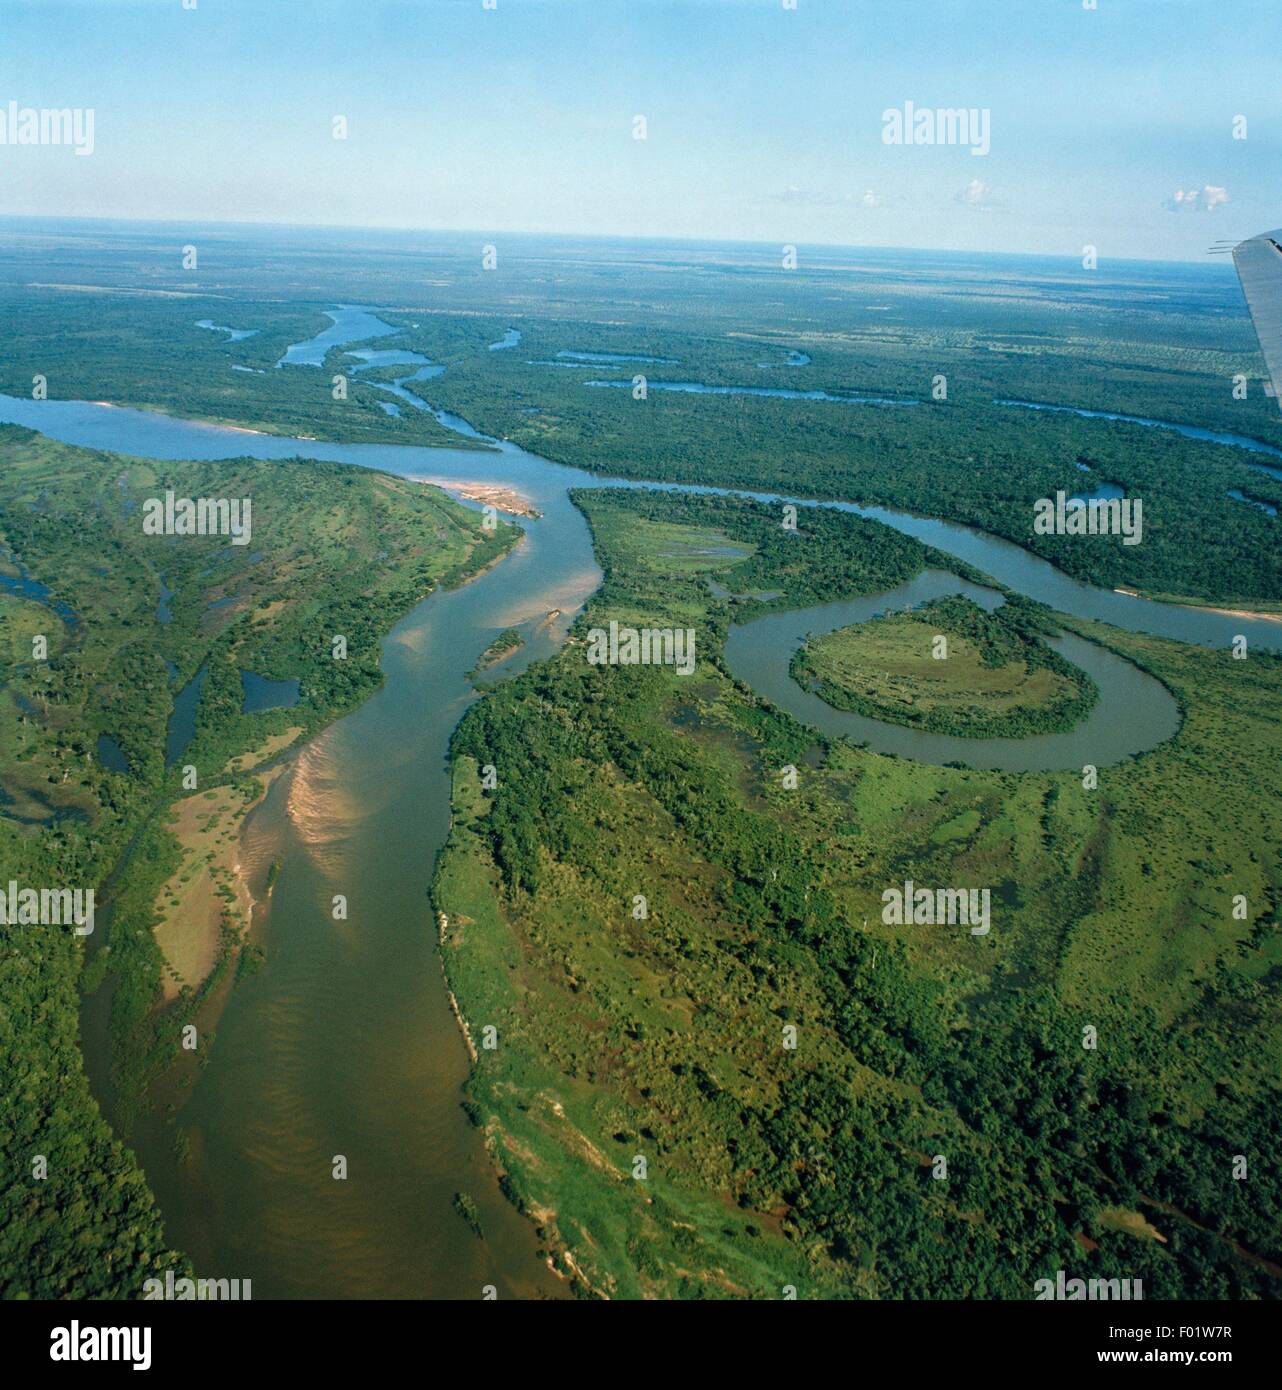 Vista aérea del curso superior del río Xingu en Brasil. Foto de stock